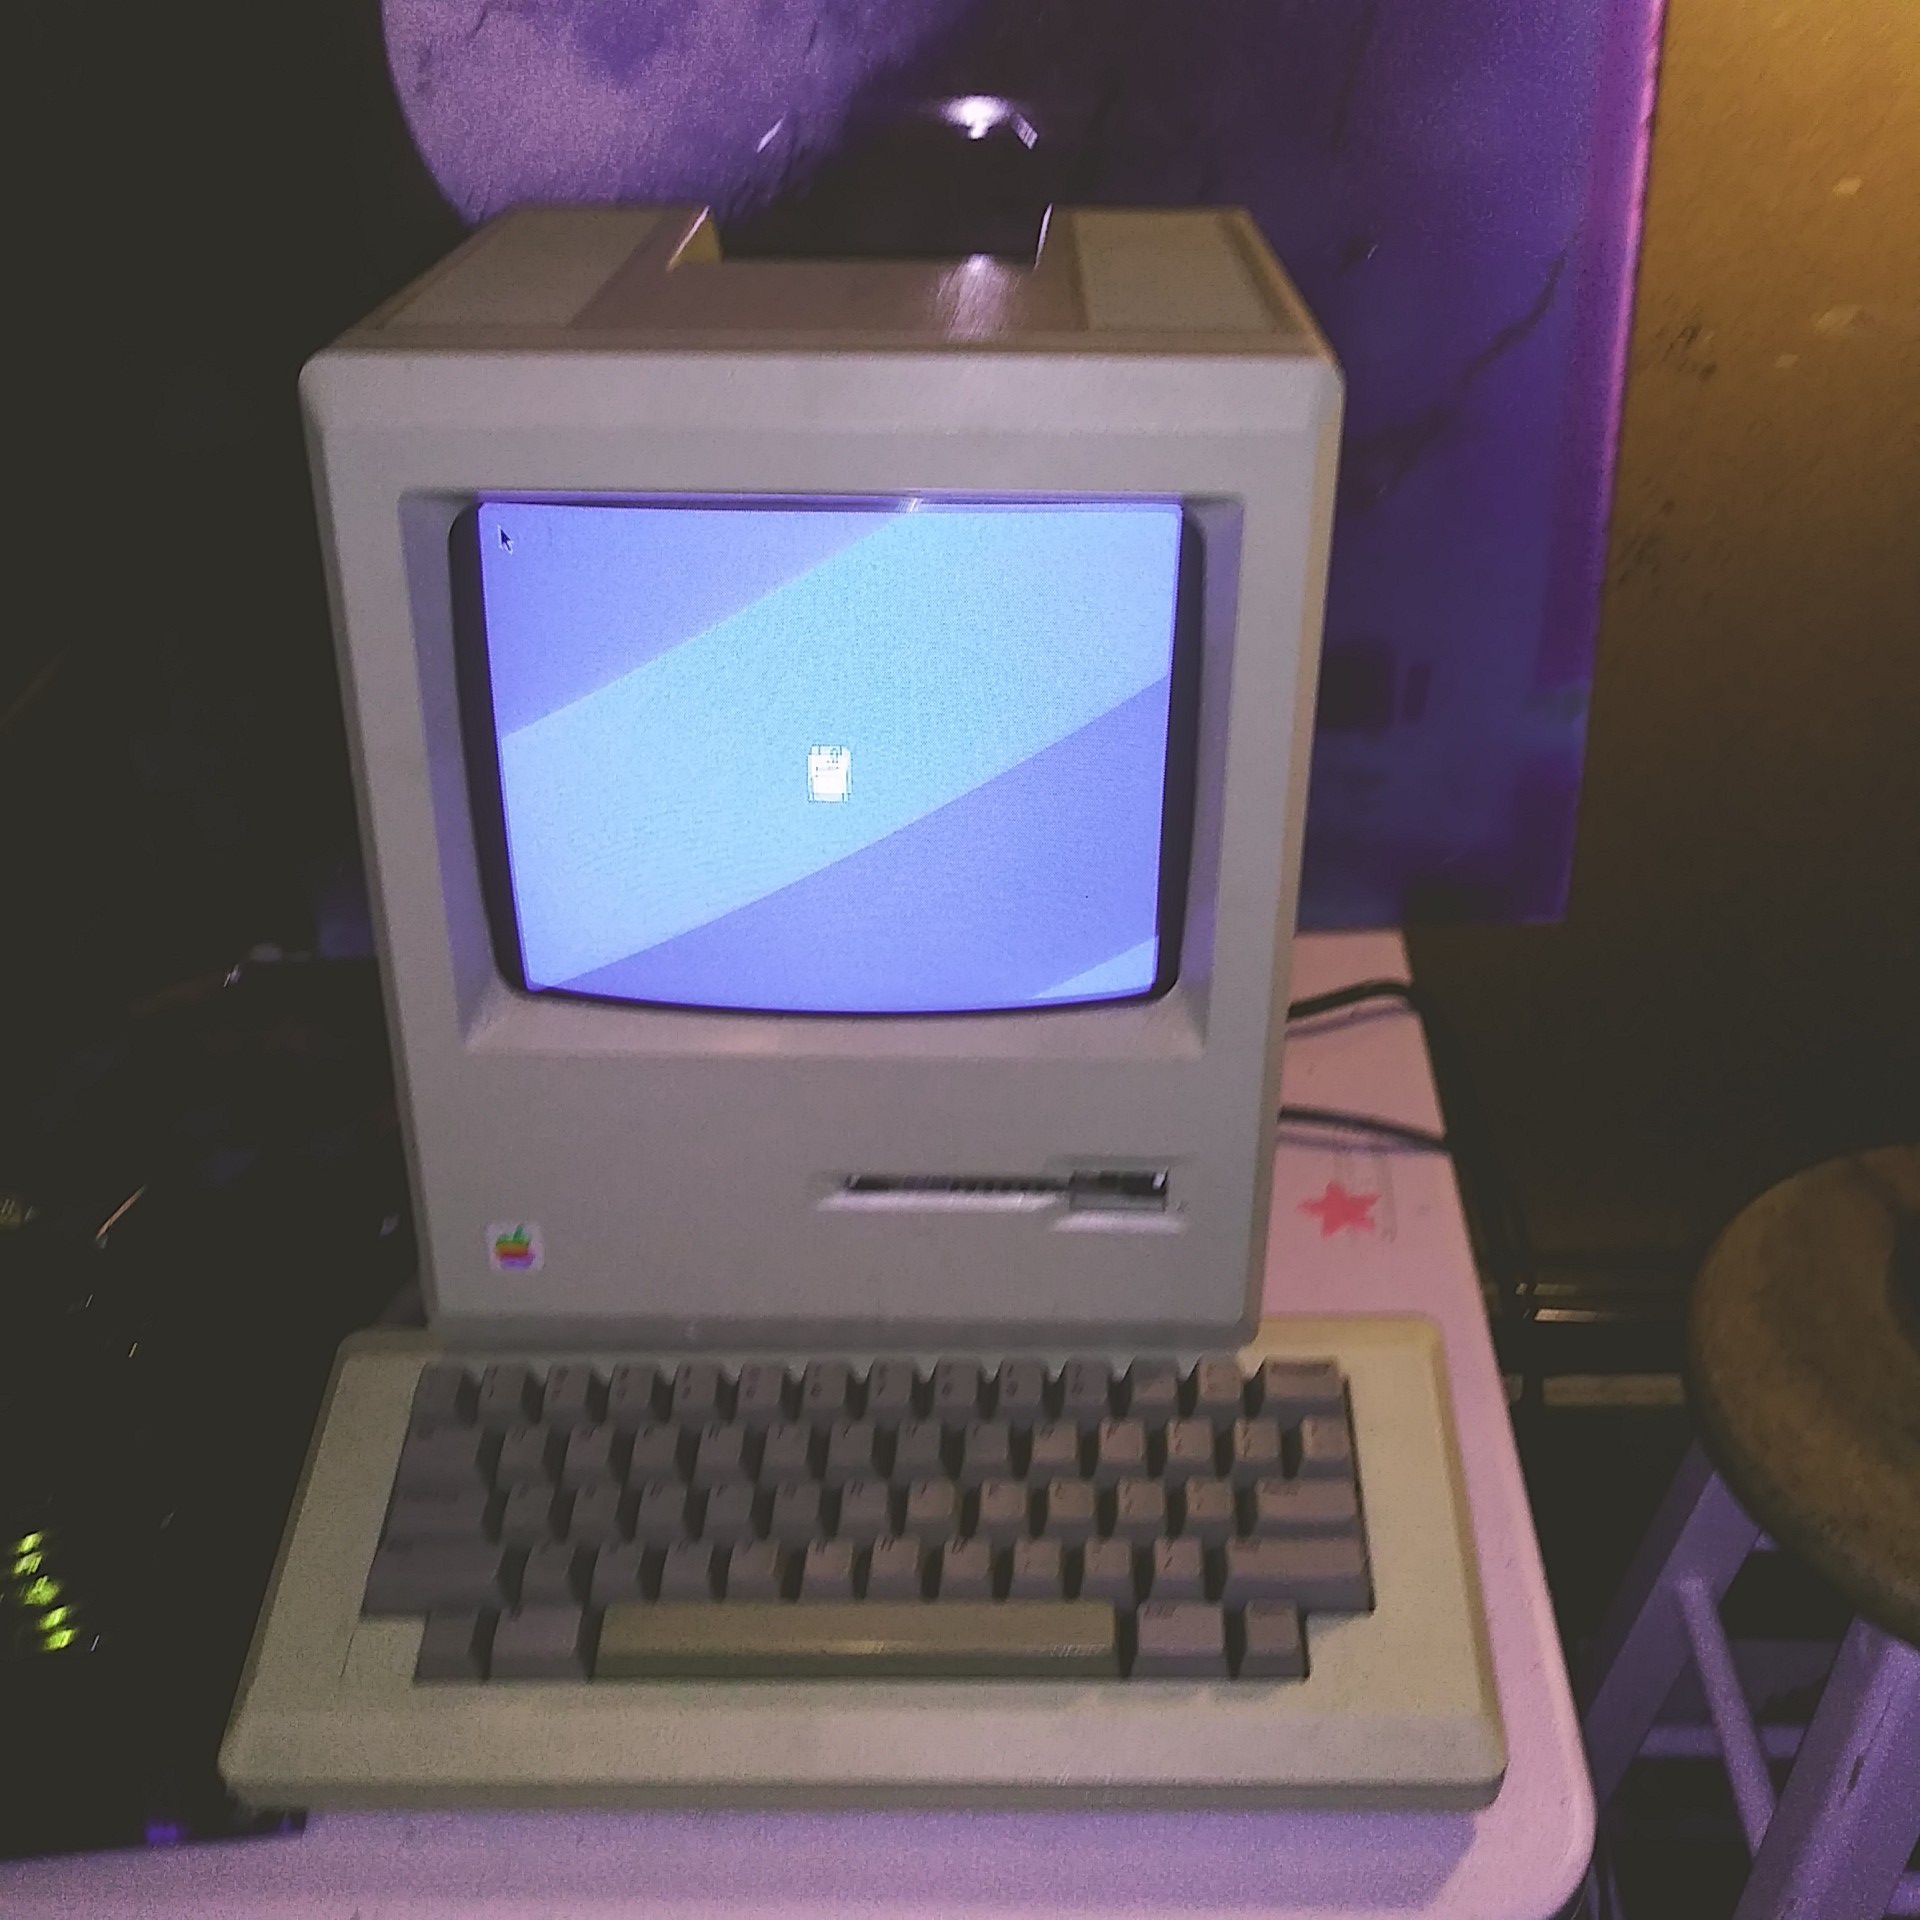 The 1st Macintosh apple computer 84"